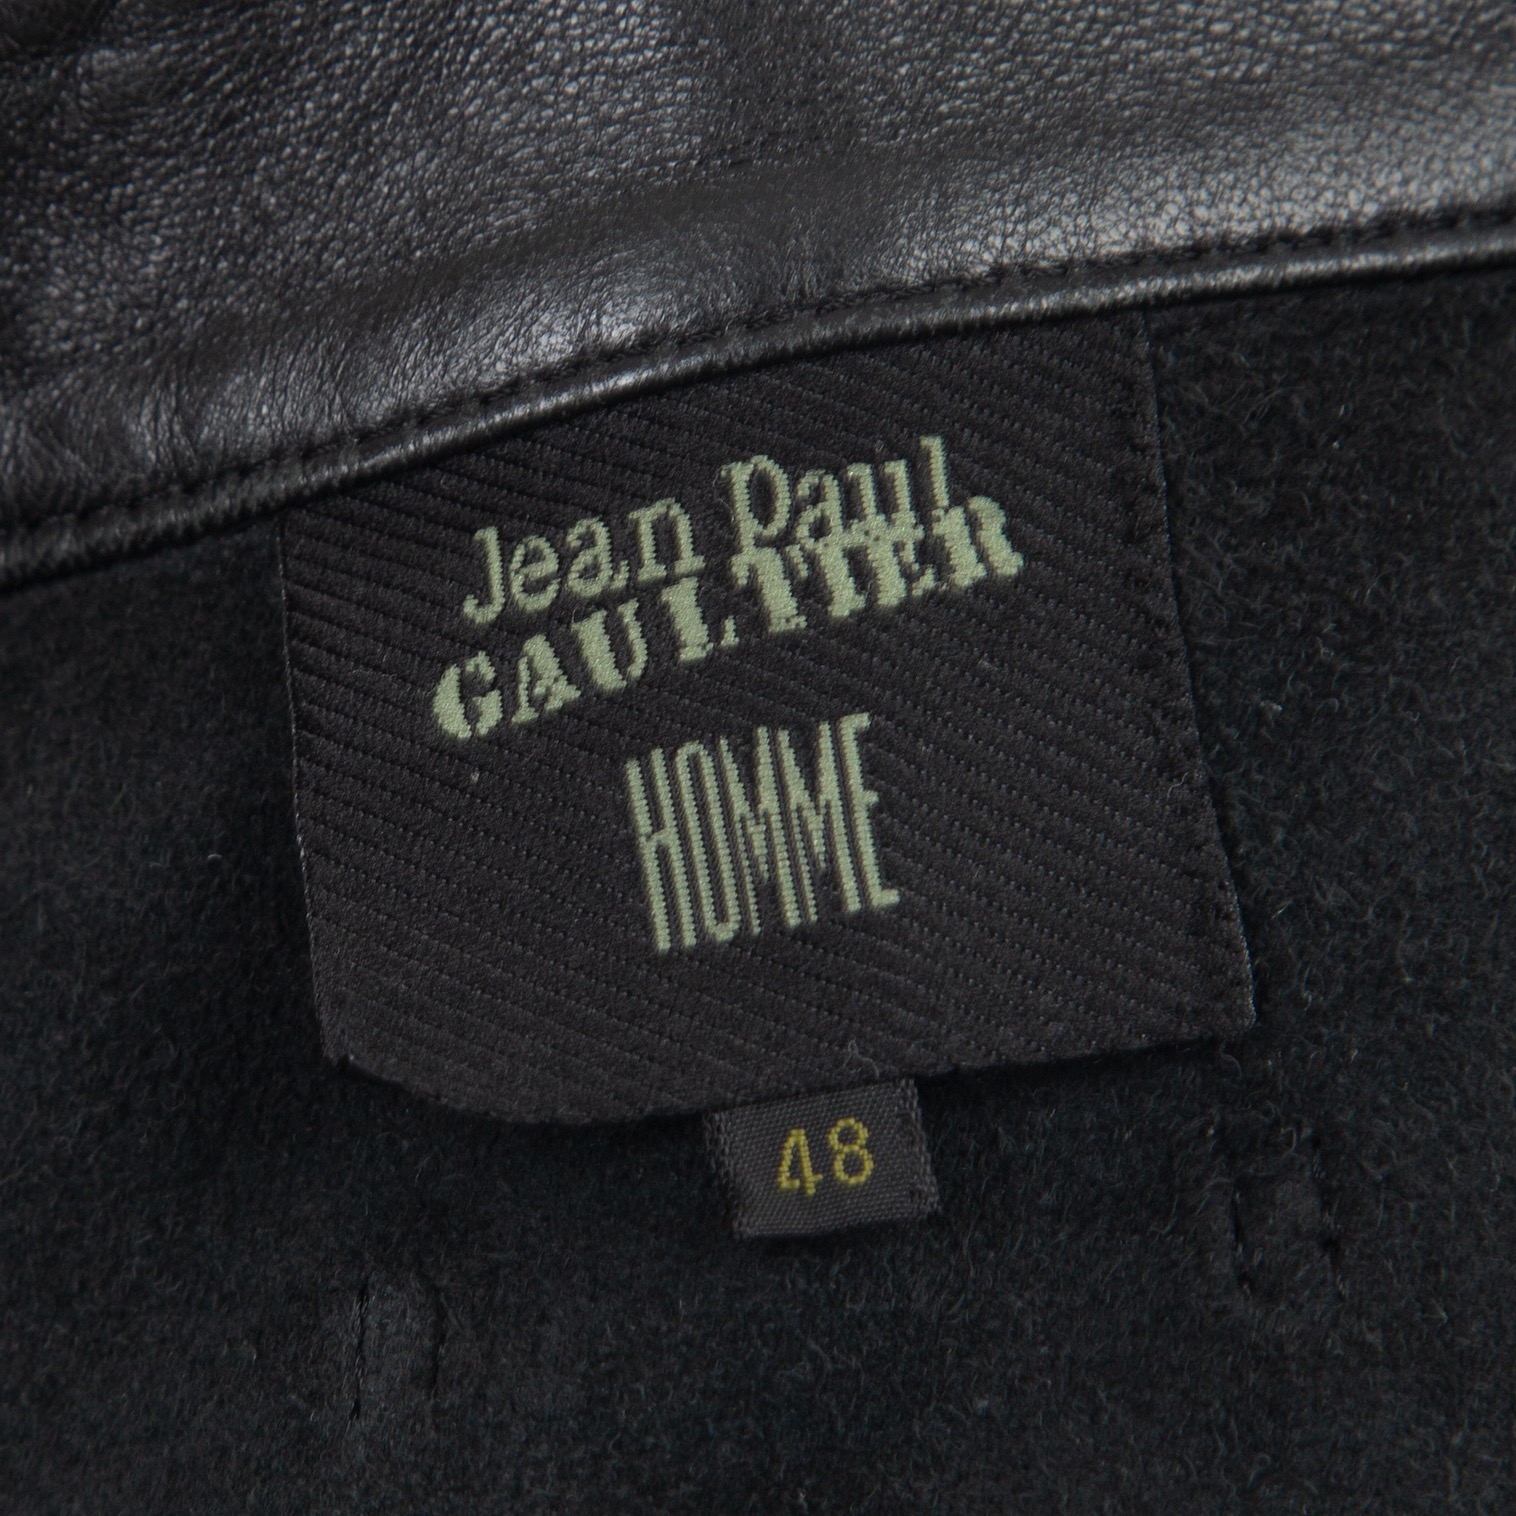 Jean Paul Gaultier Homme バックデザイン パンツ-